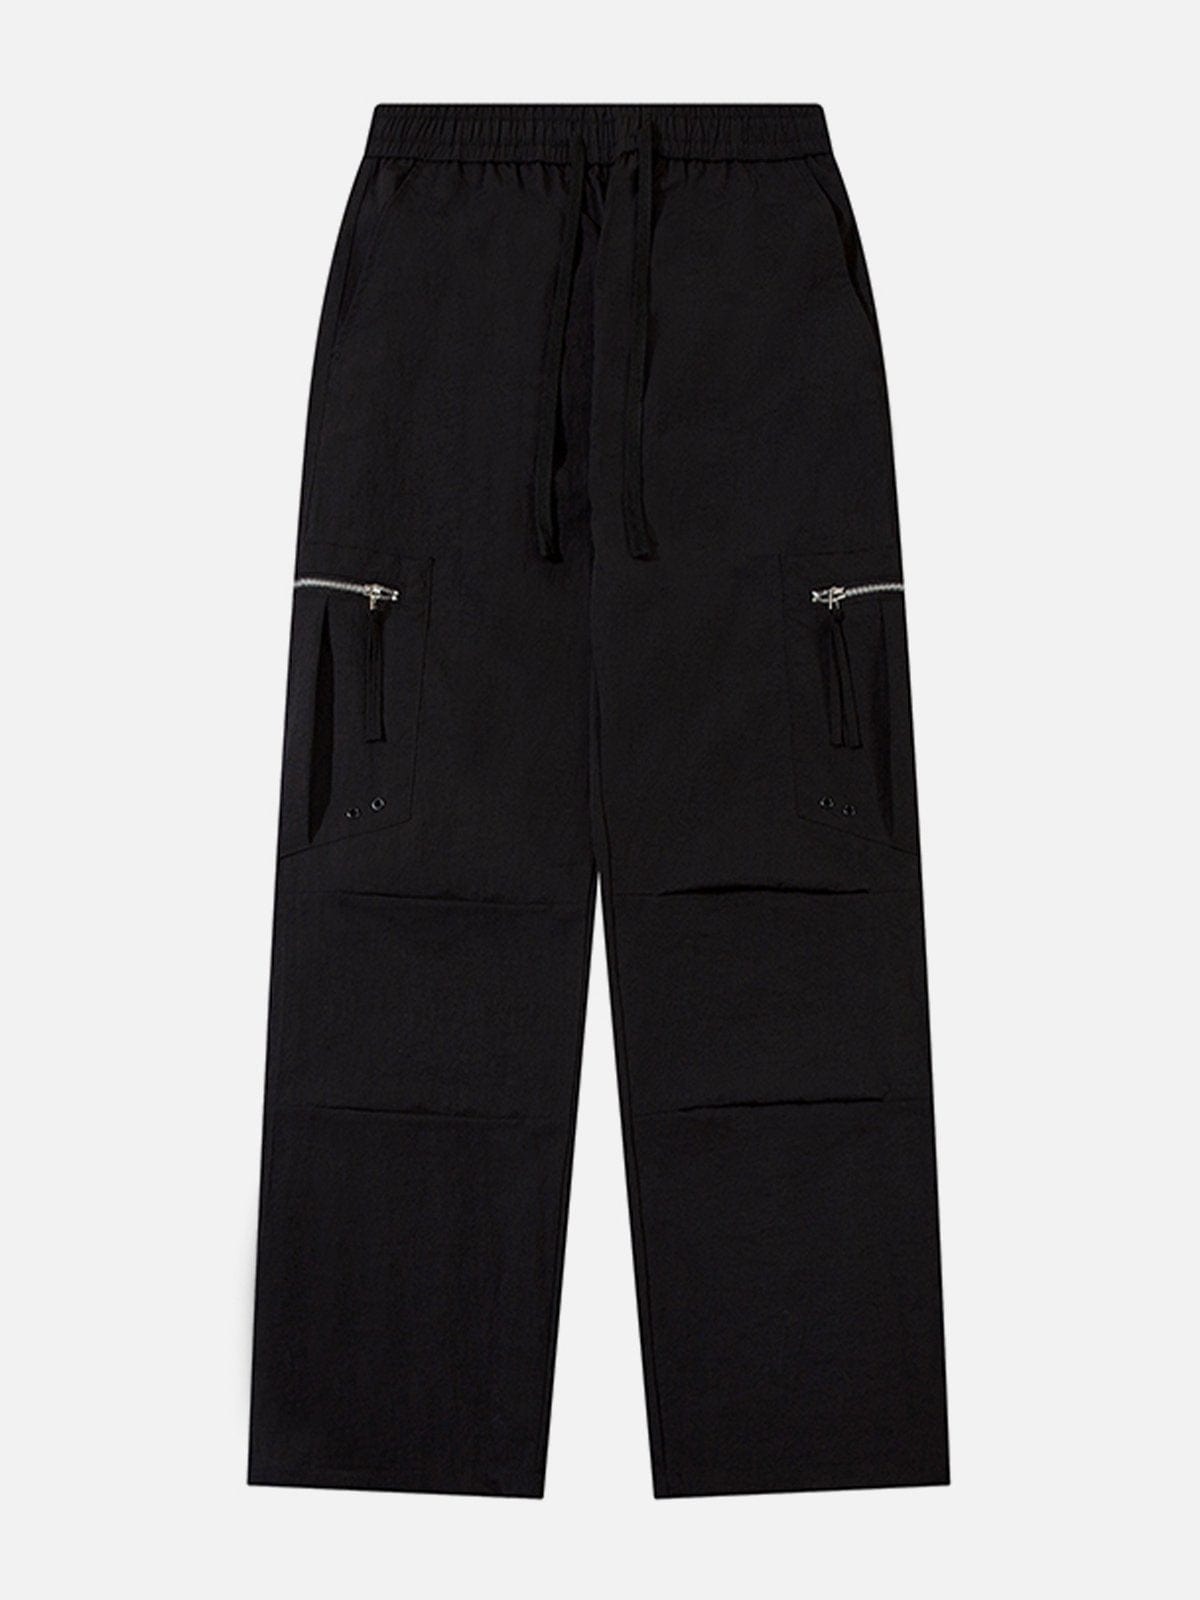 NEV Zippered Drawstring Waterproof Pants